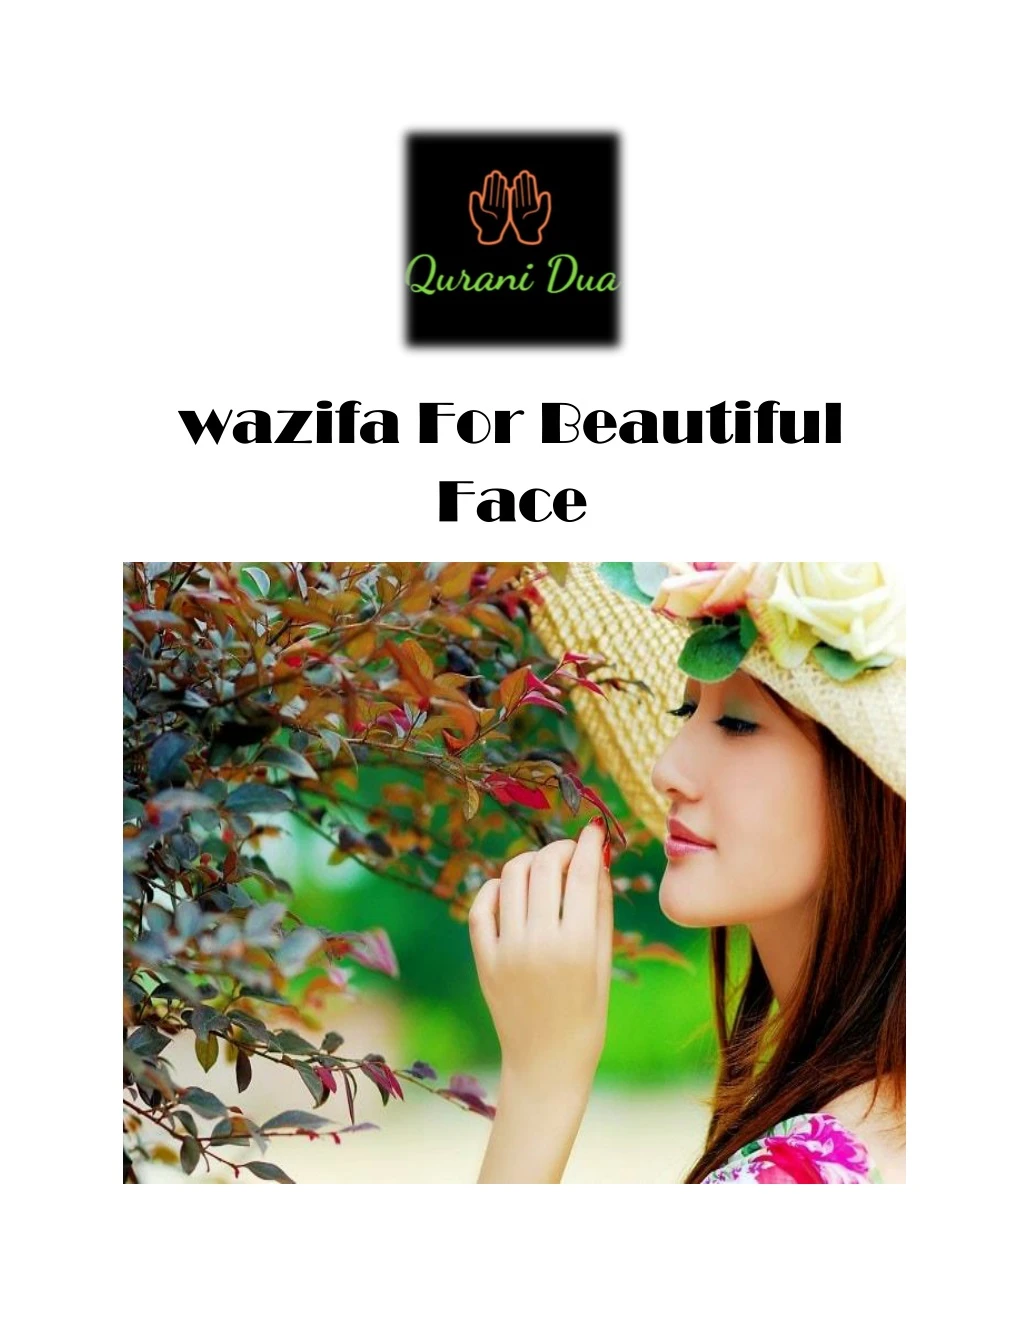 wazifa for beautiful face